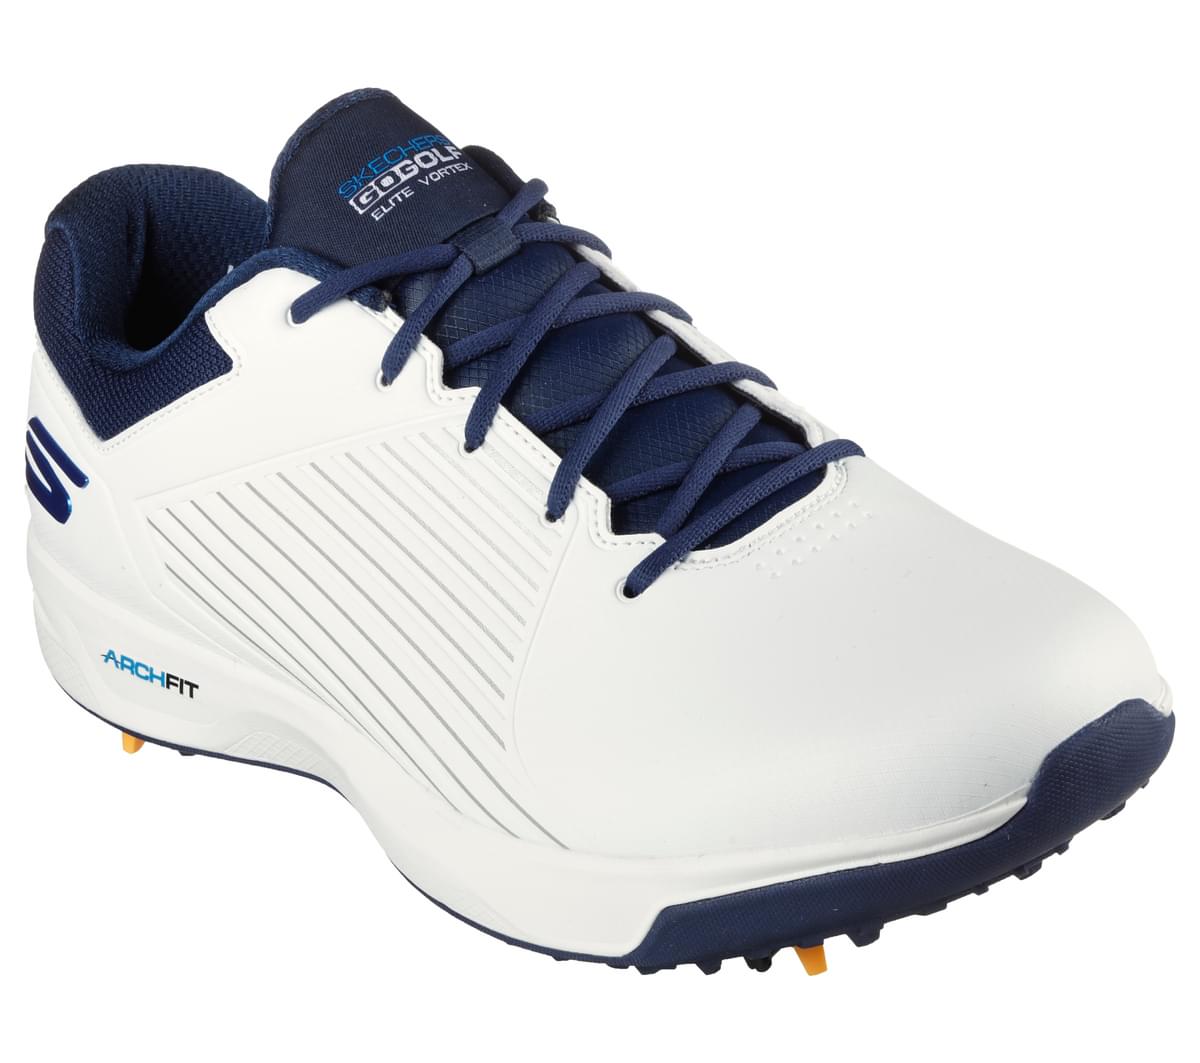 Skechers Go Golf Elite Vortex Spiked Golf Shoes 214064 + Free Gift White / Navy / Black 7 